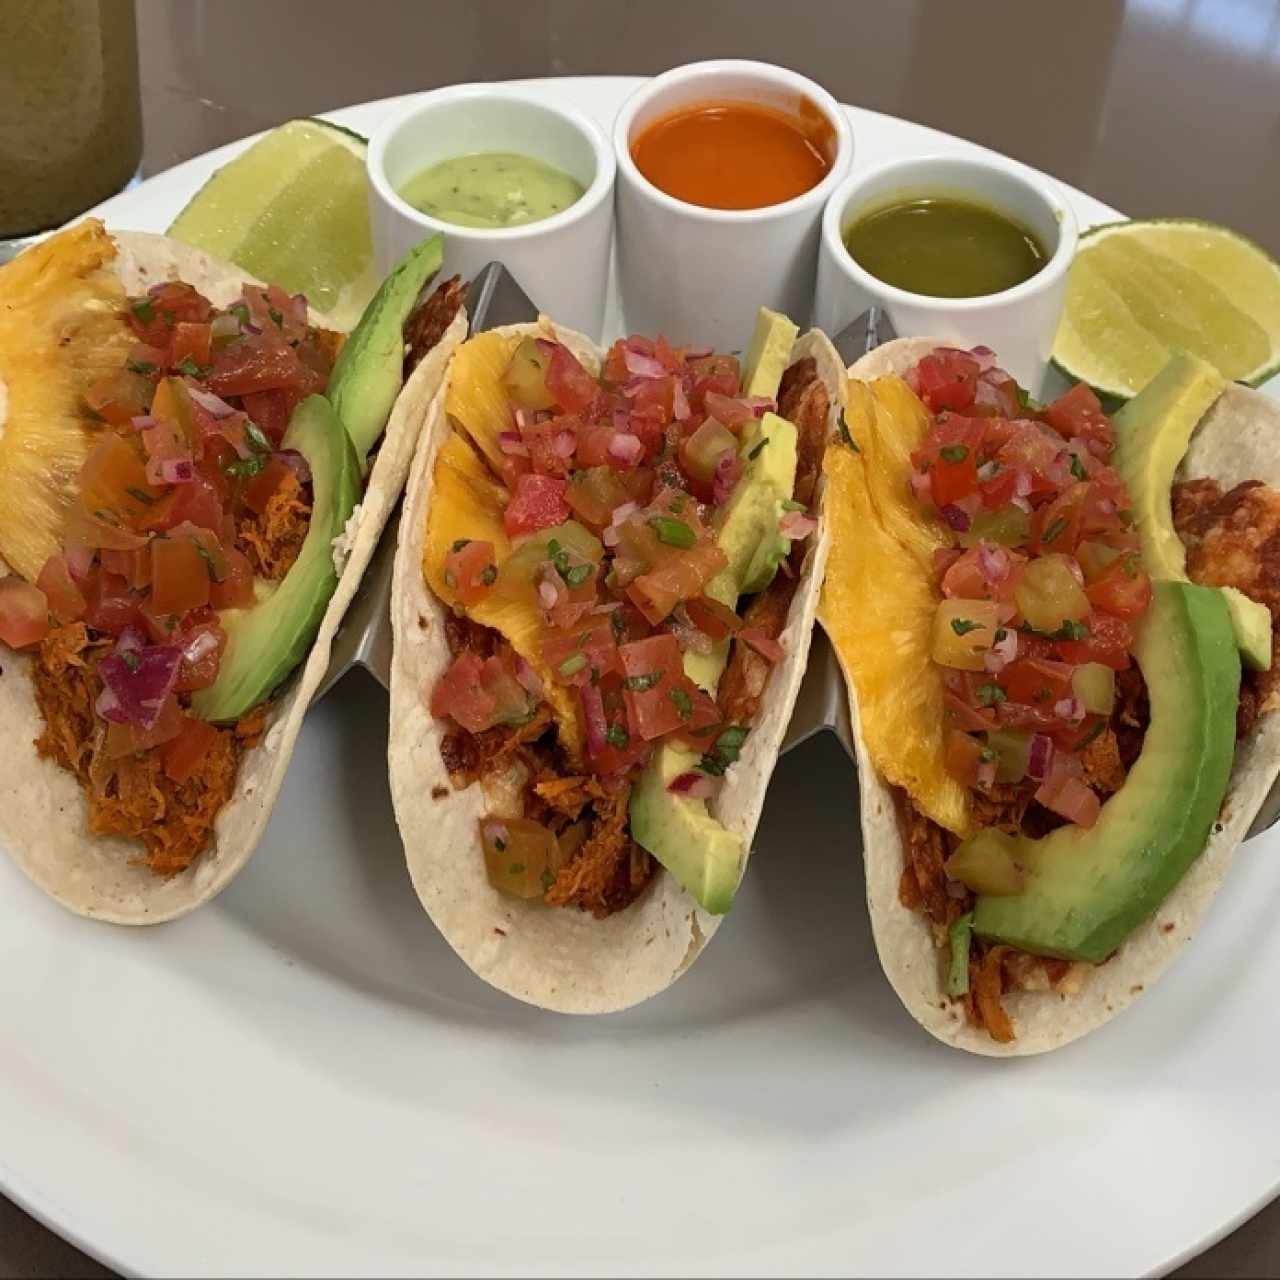 Tacos motuleños